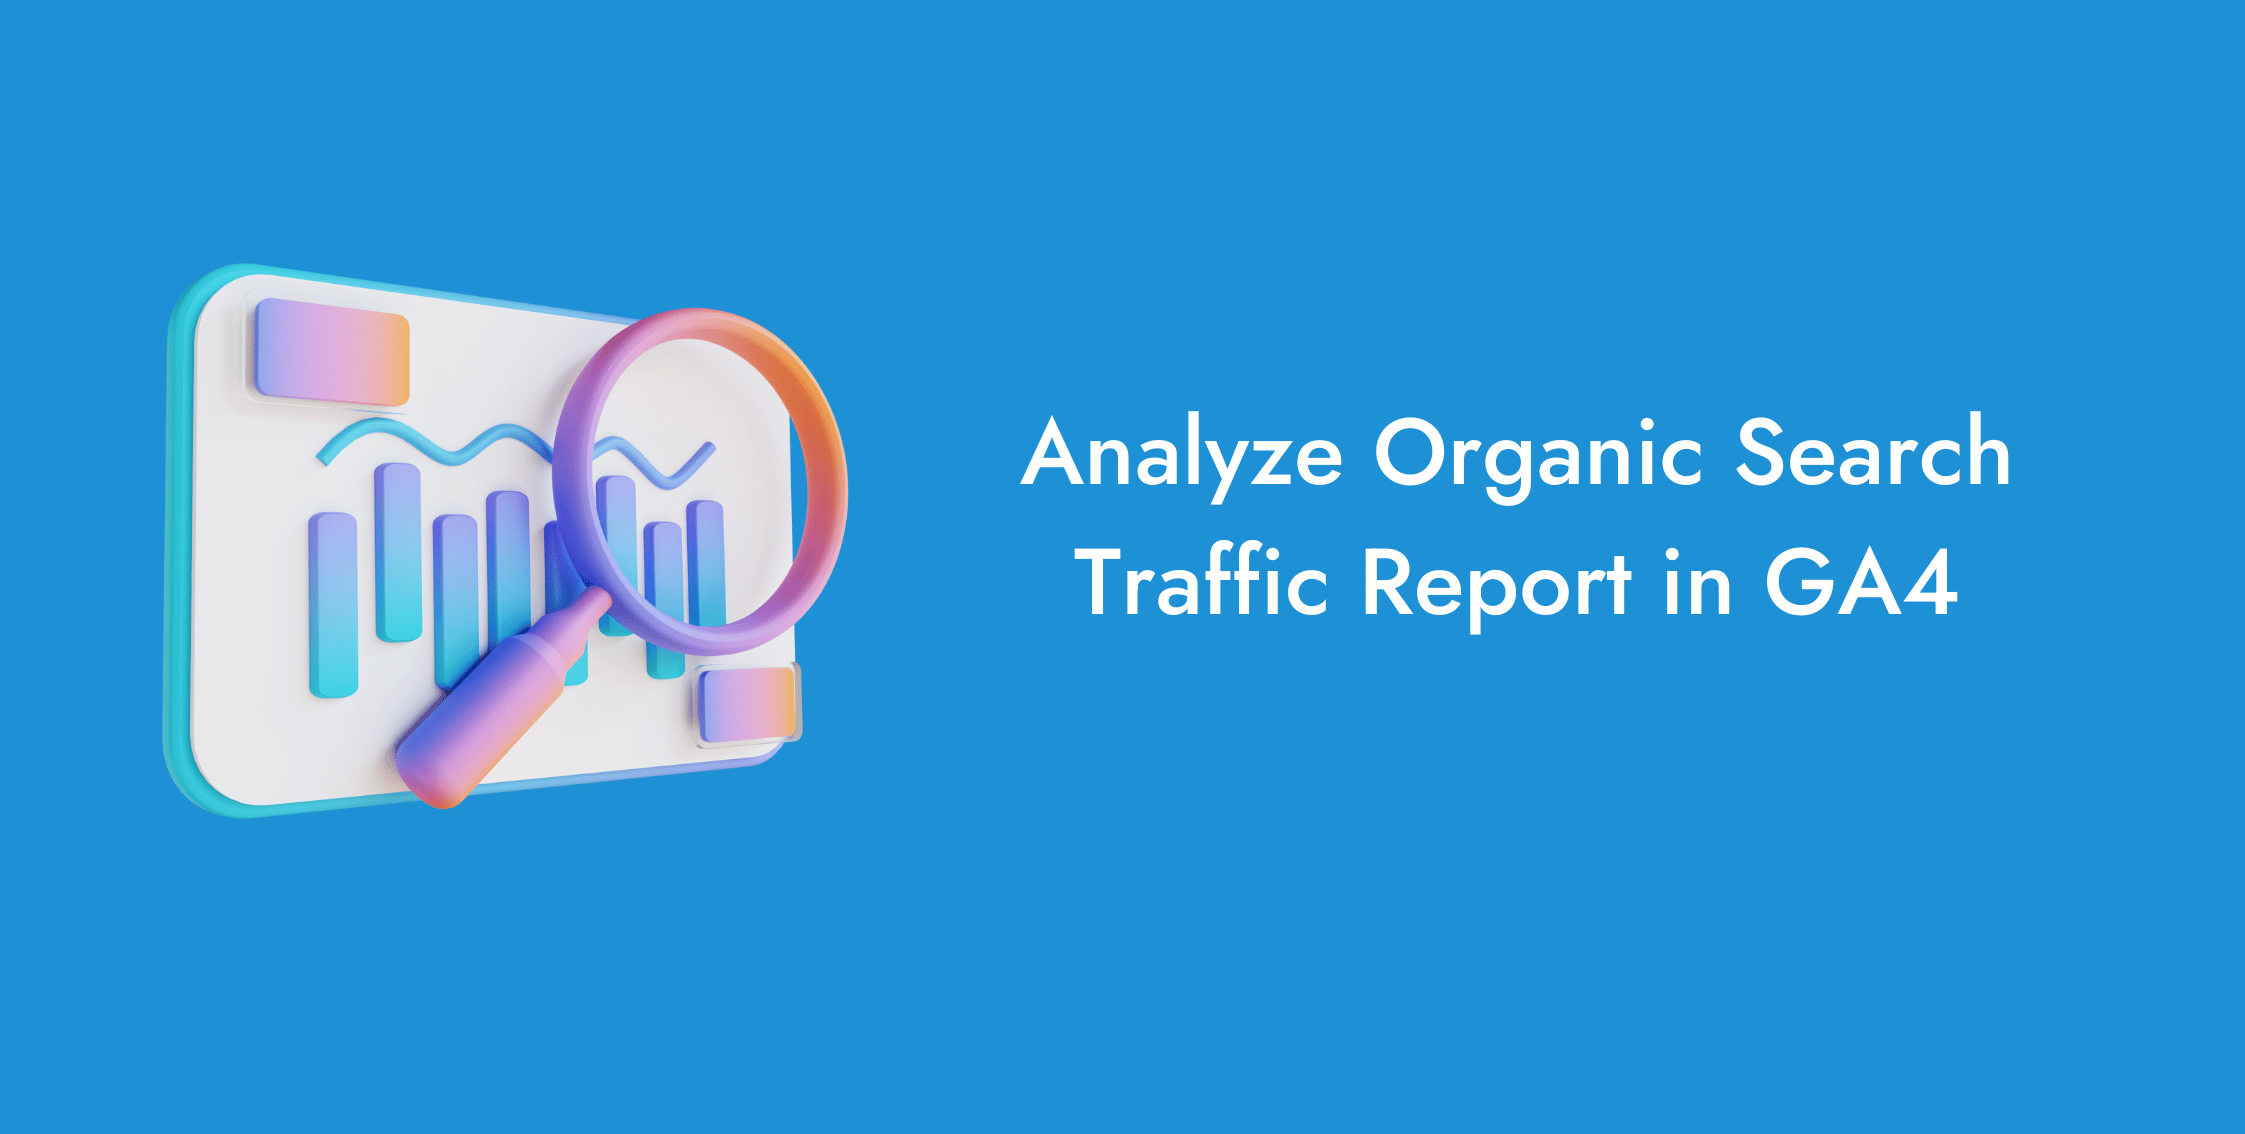 How To Analyze Organic Search Traffic In GA4?